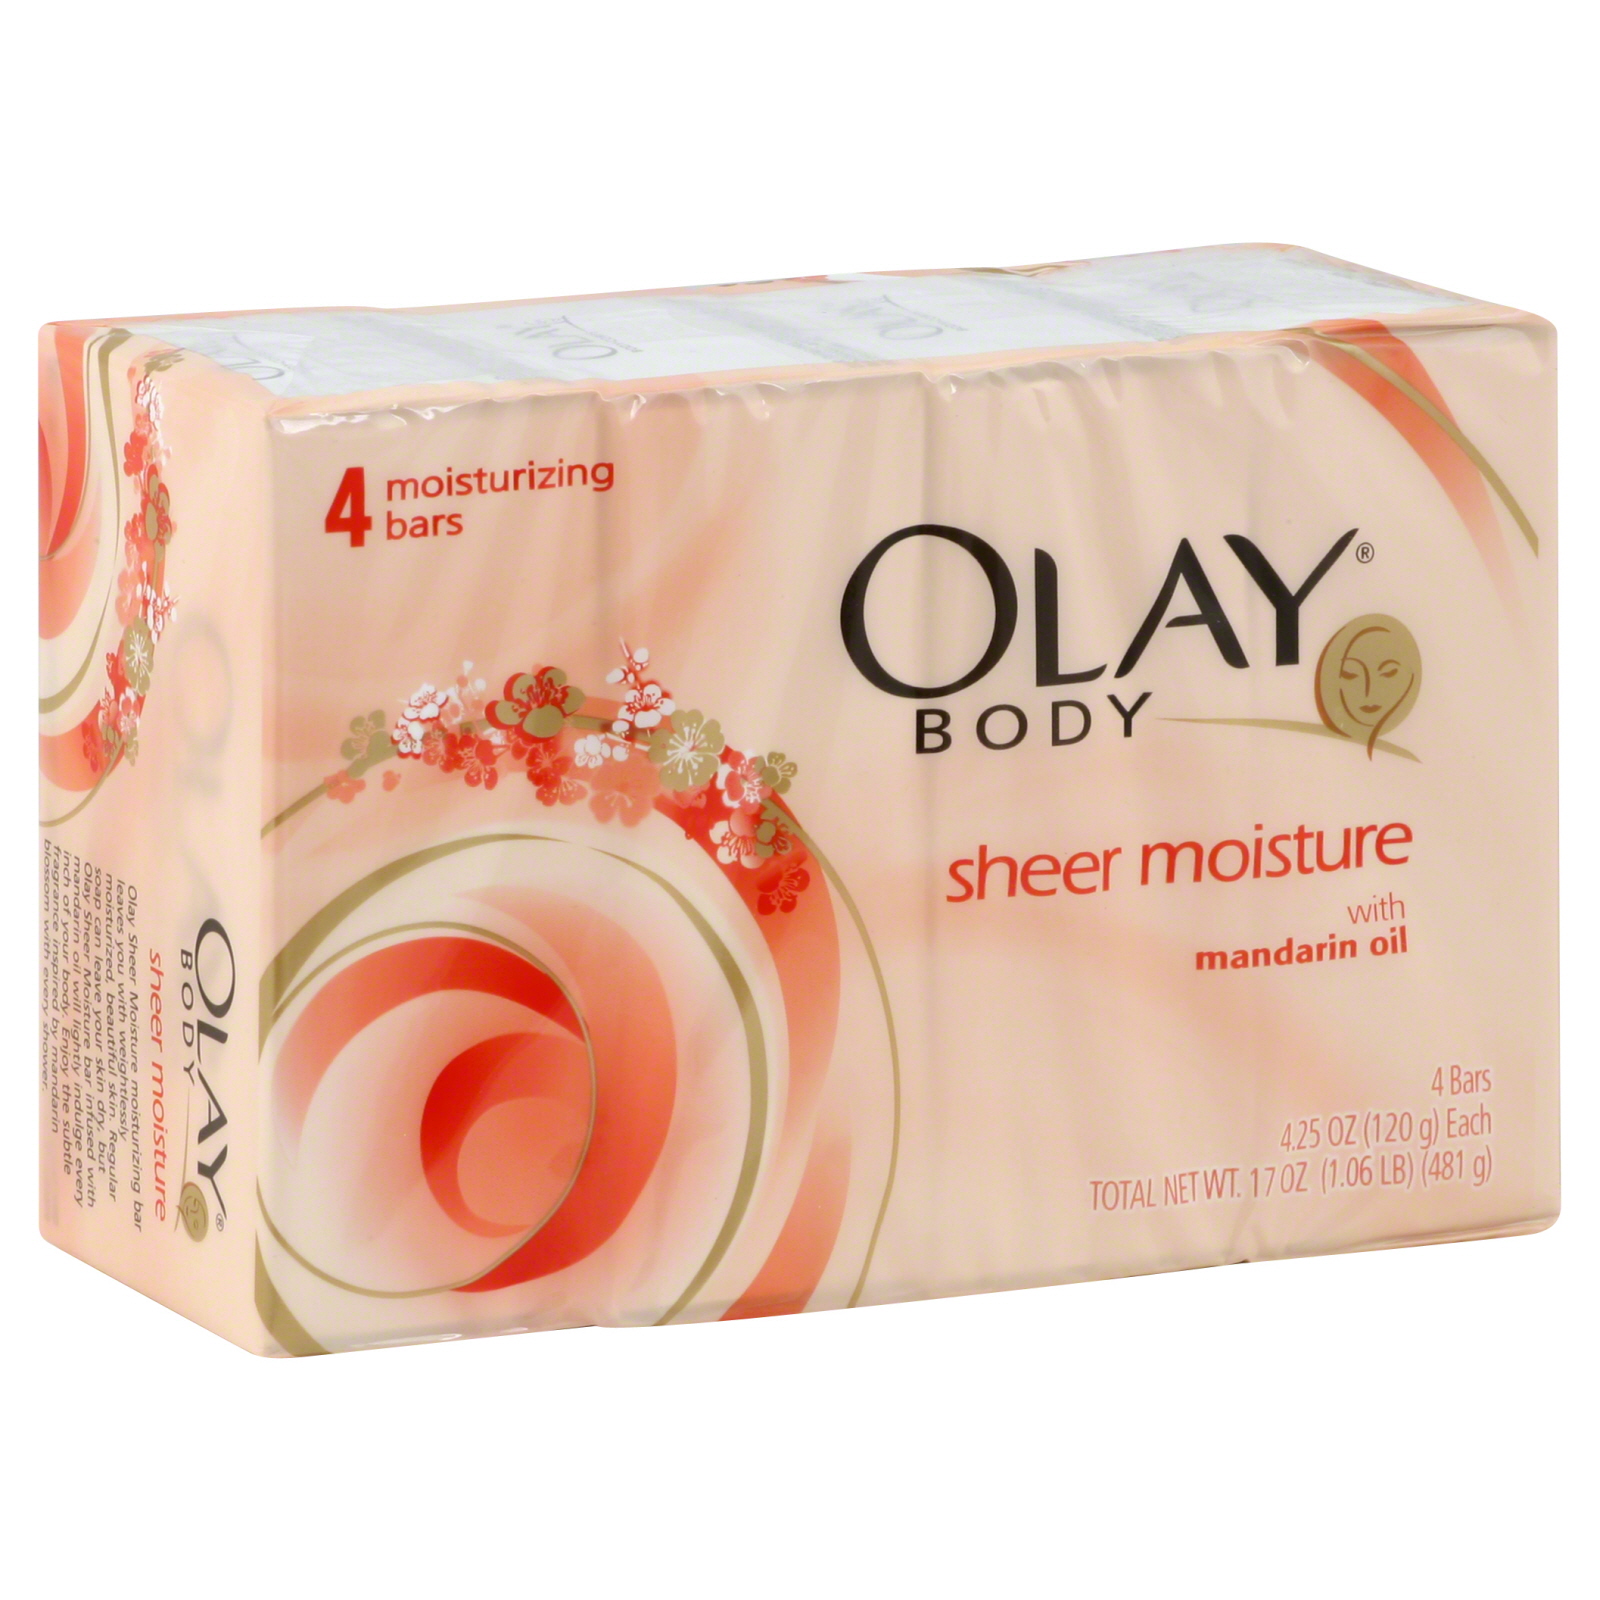 Olay Body Moisturizing Bars, Sheer Moisture, with Mandarin Oil, 4 - 4.25 oz (120 g) bars [17 oz (1.06 lb) 481 g]